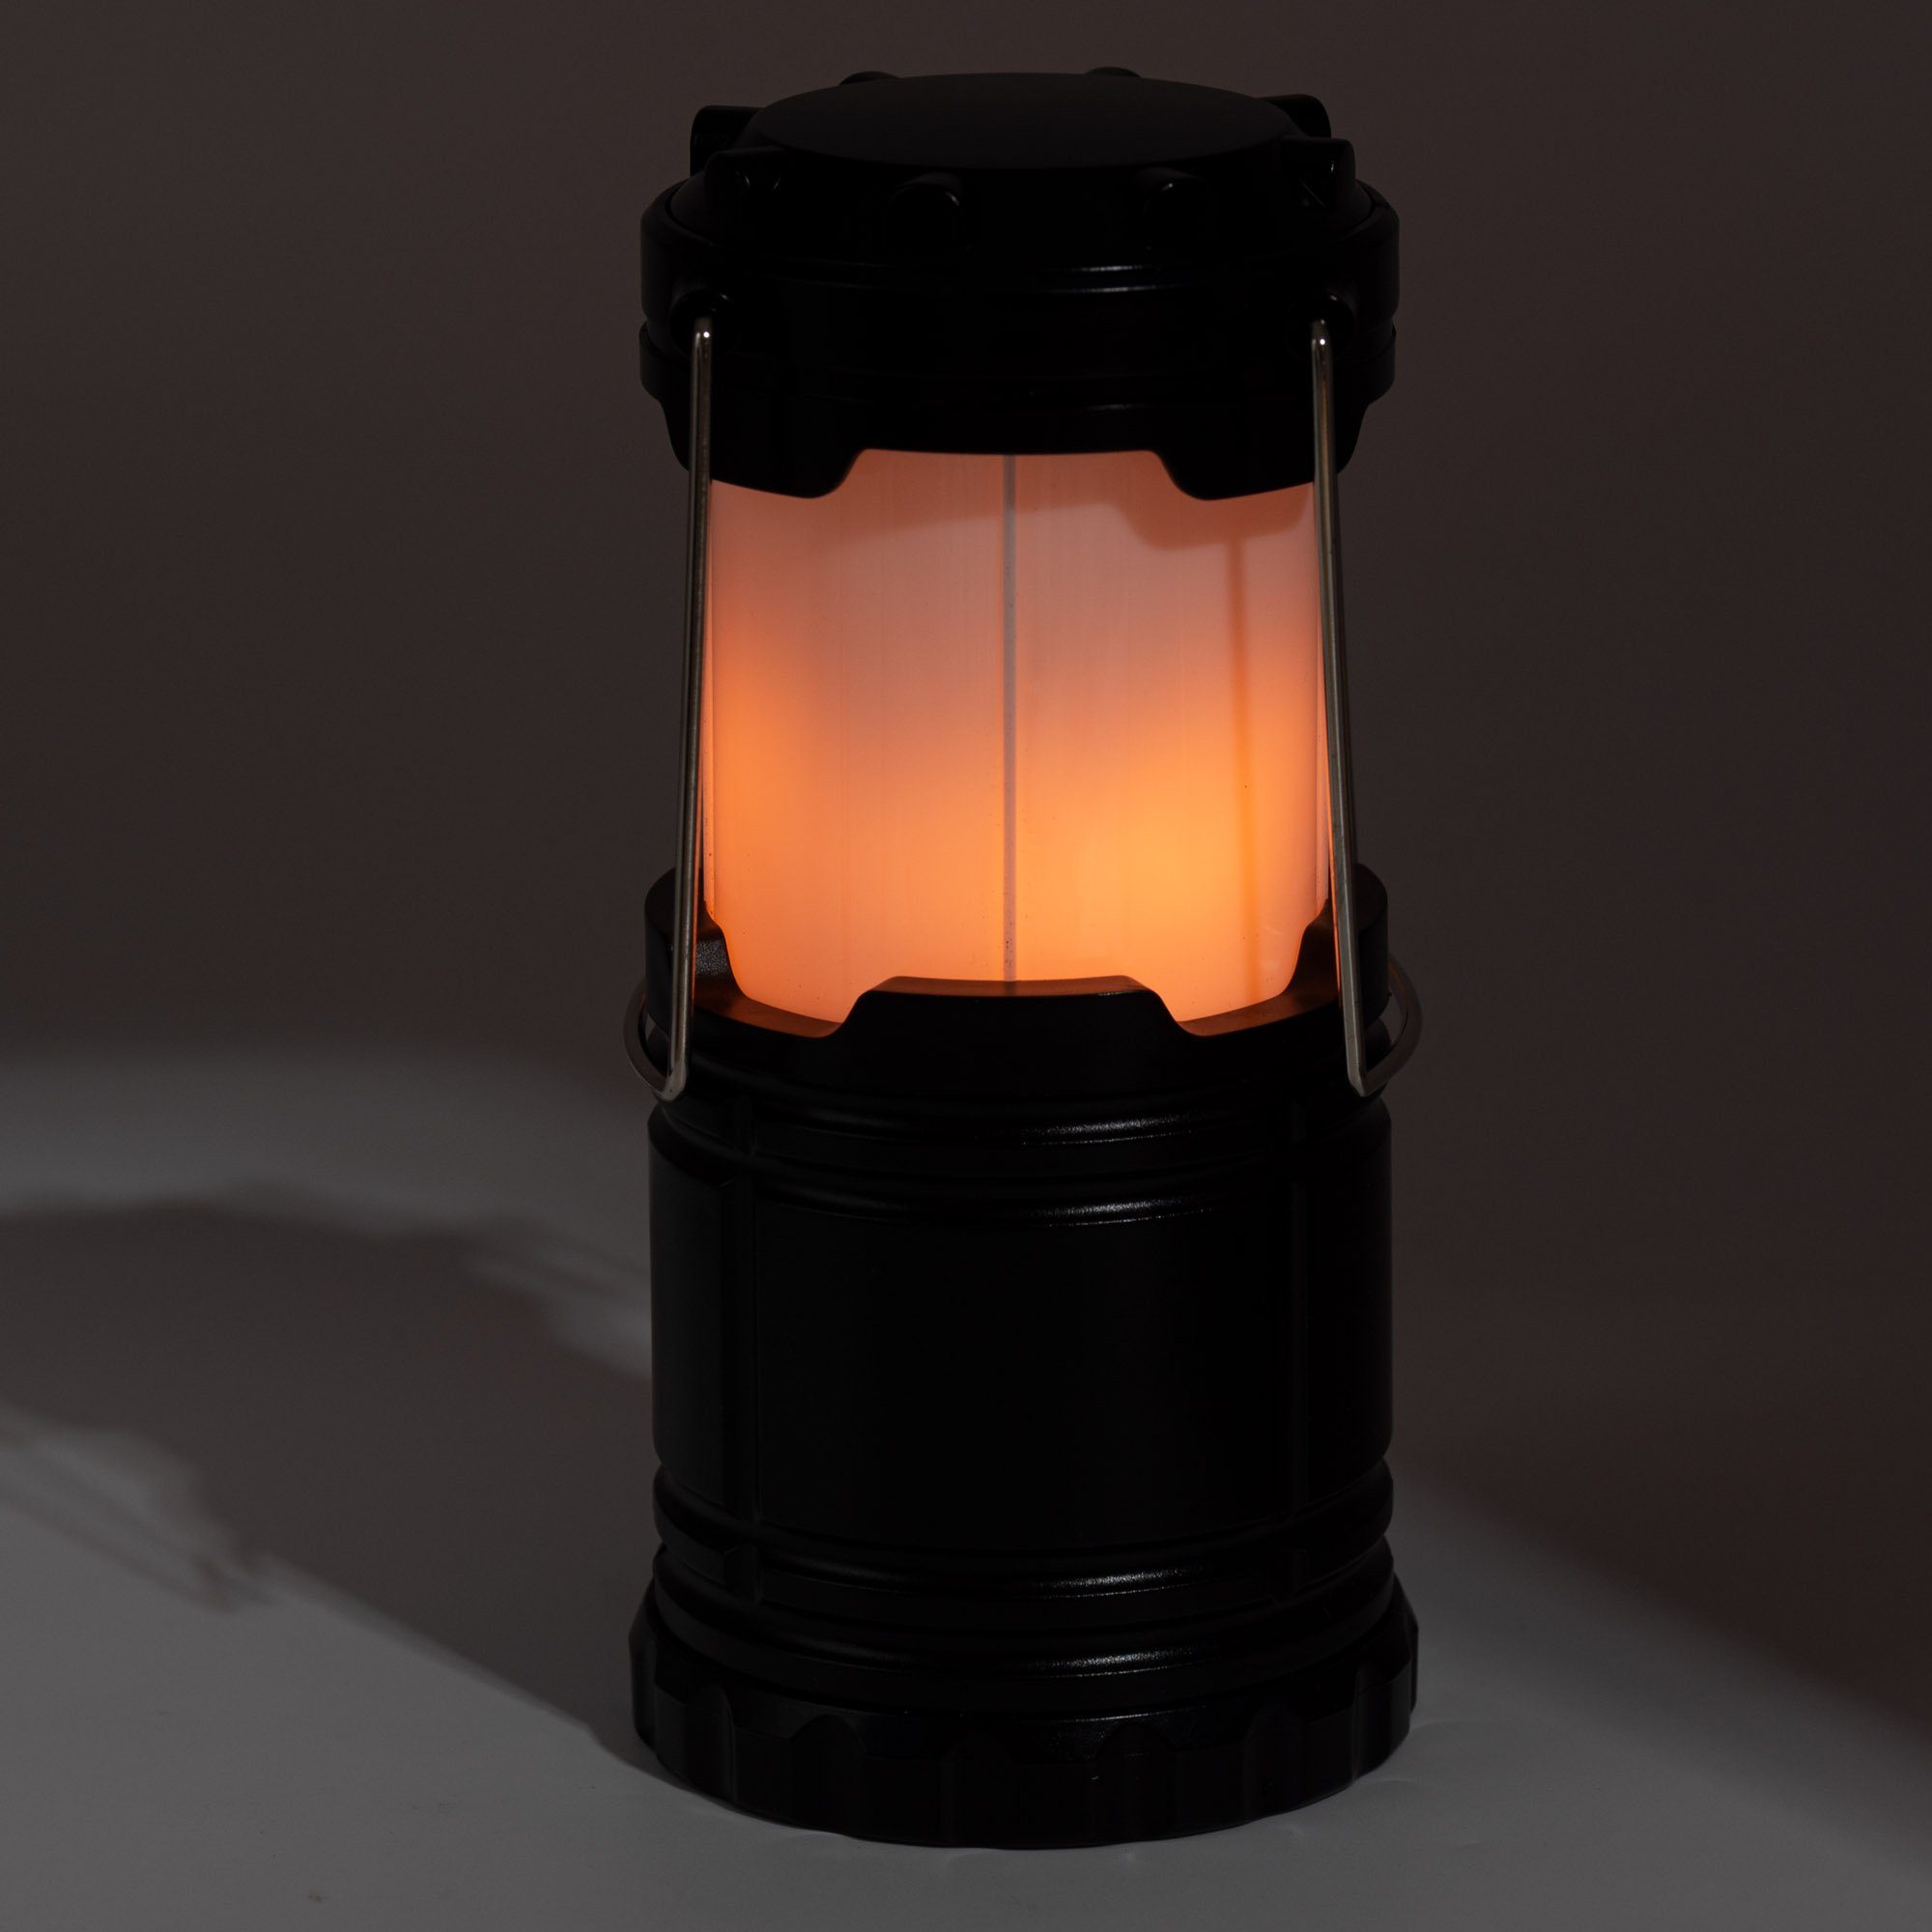 Leuchte Batterie, Lampe Garten, Effekt BENSON Zelt Campinglampe Flammen, LED Laterne, 2in1 Taschenlampe